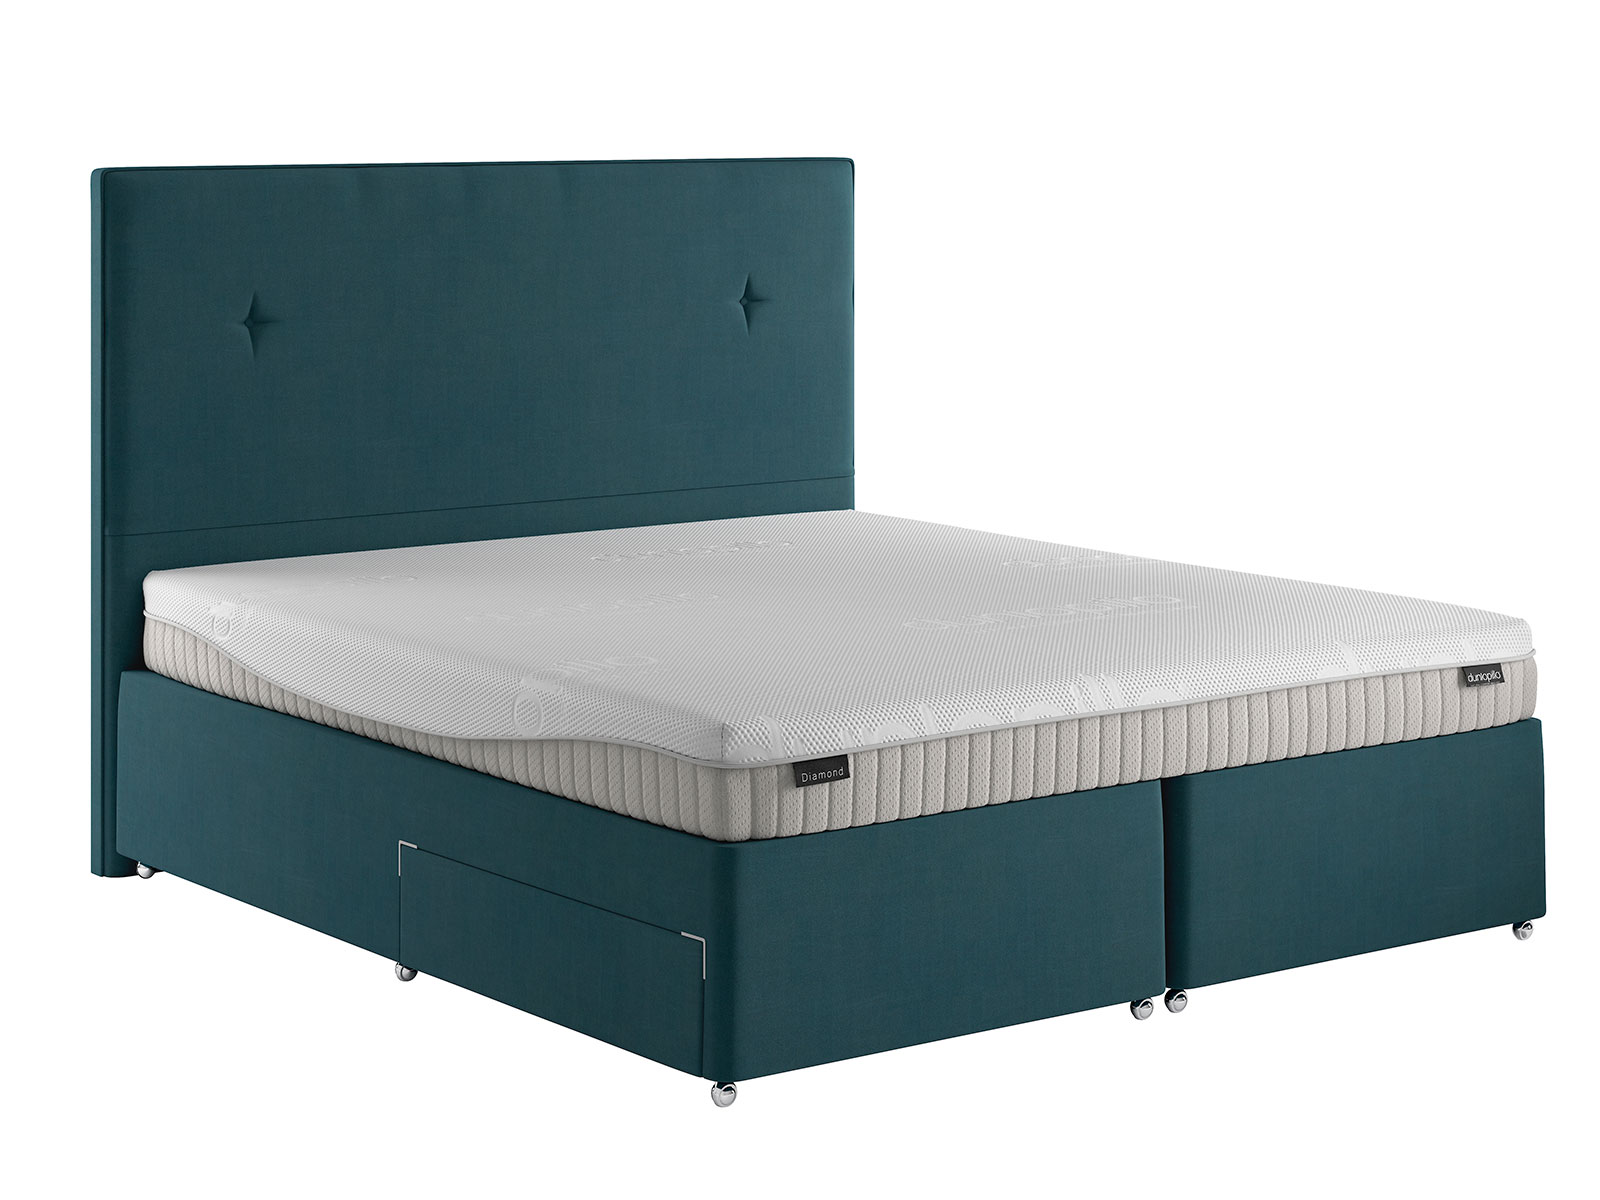 dunlopillo mattress reviews uk